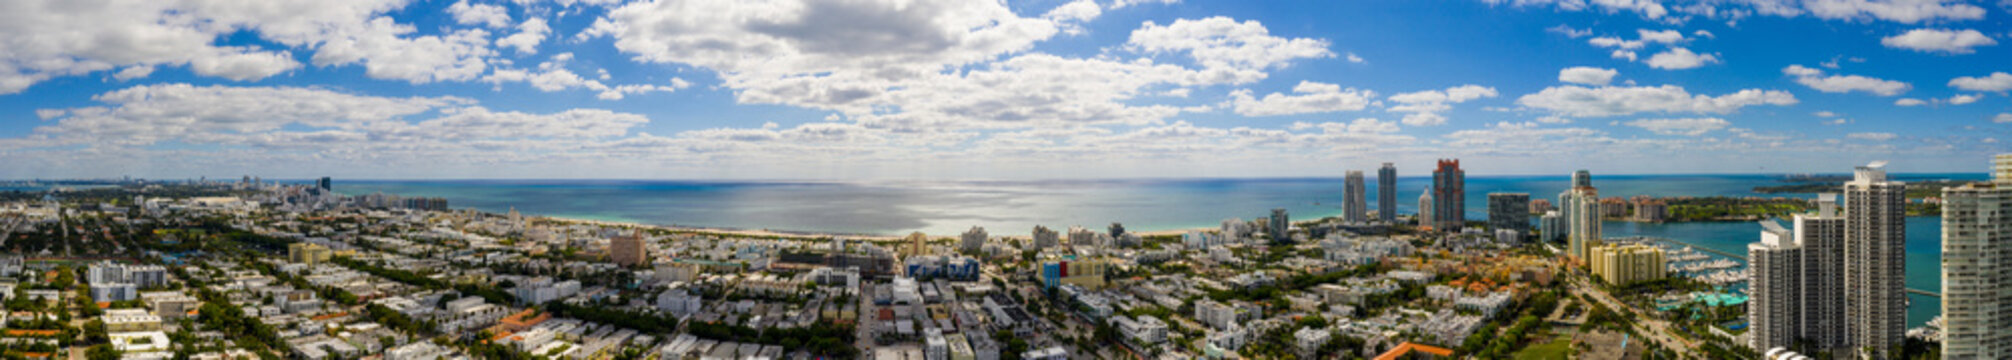 Aerial colorful summer panorama Miami Beach FL image